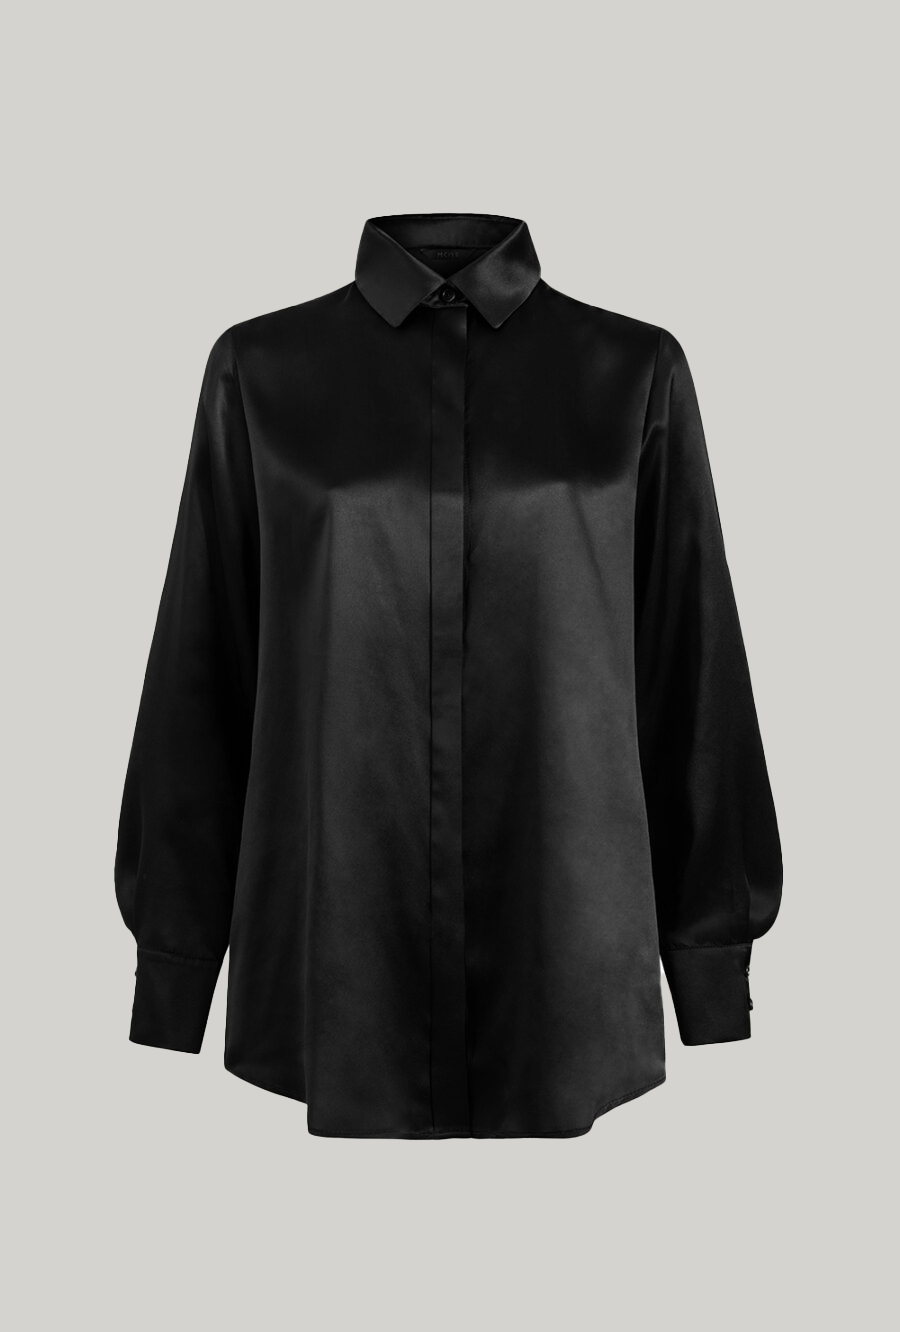 Black silk satin classic shirt